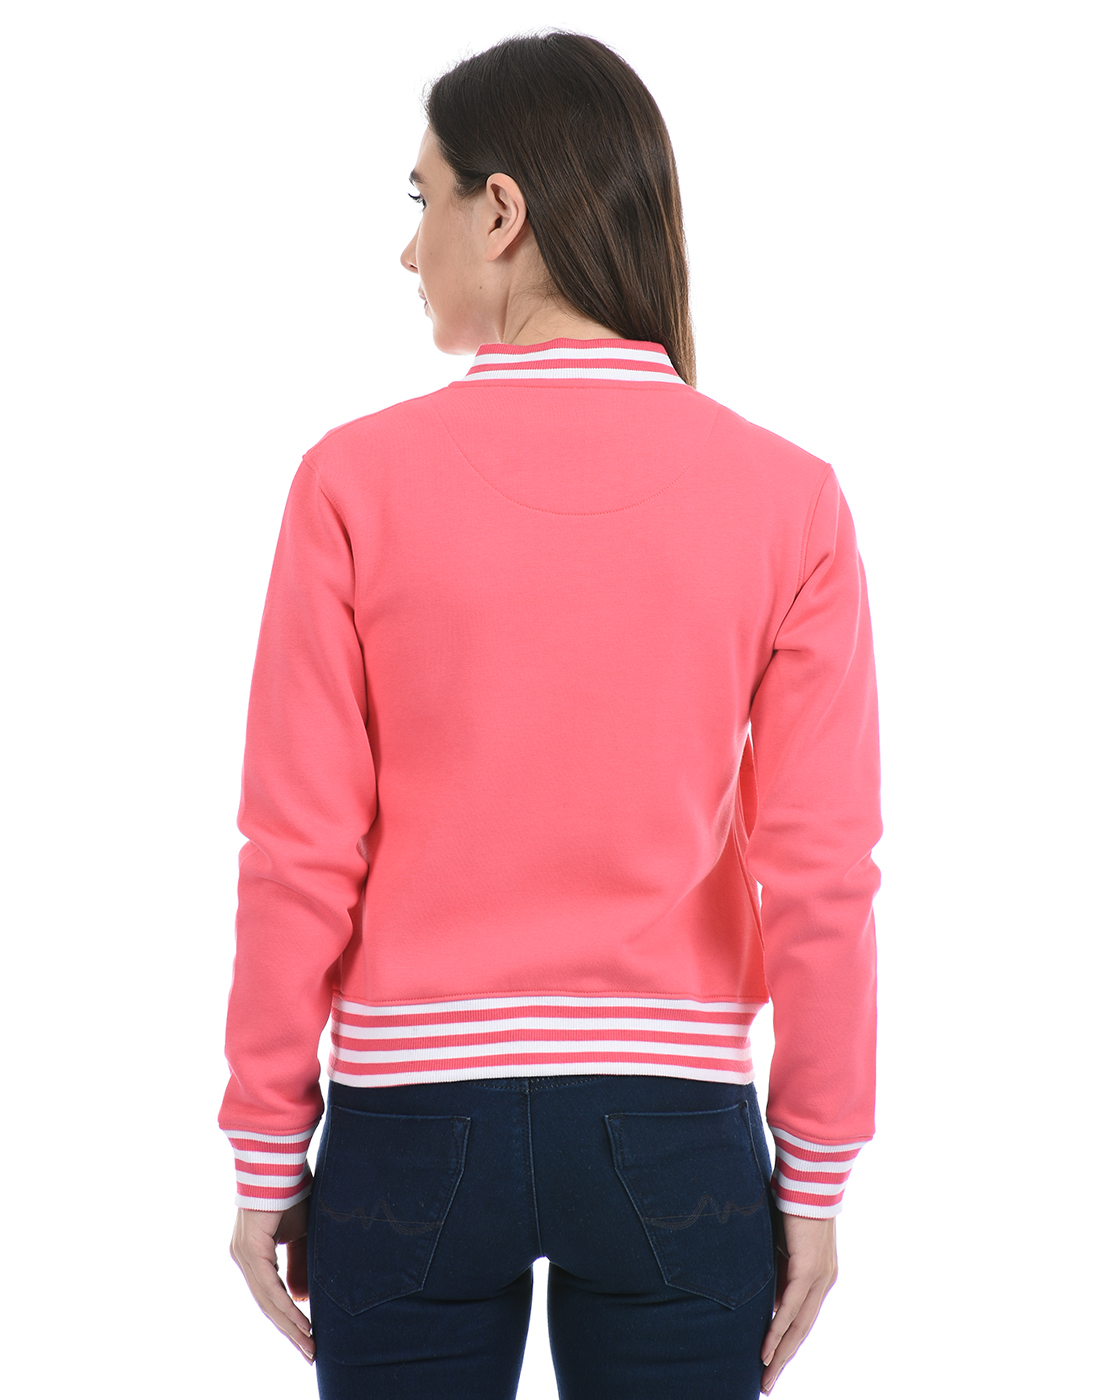 Oneway Women Striped Pink Jacket